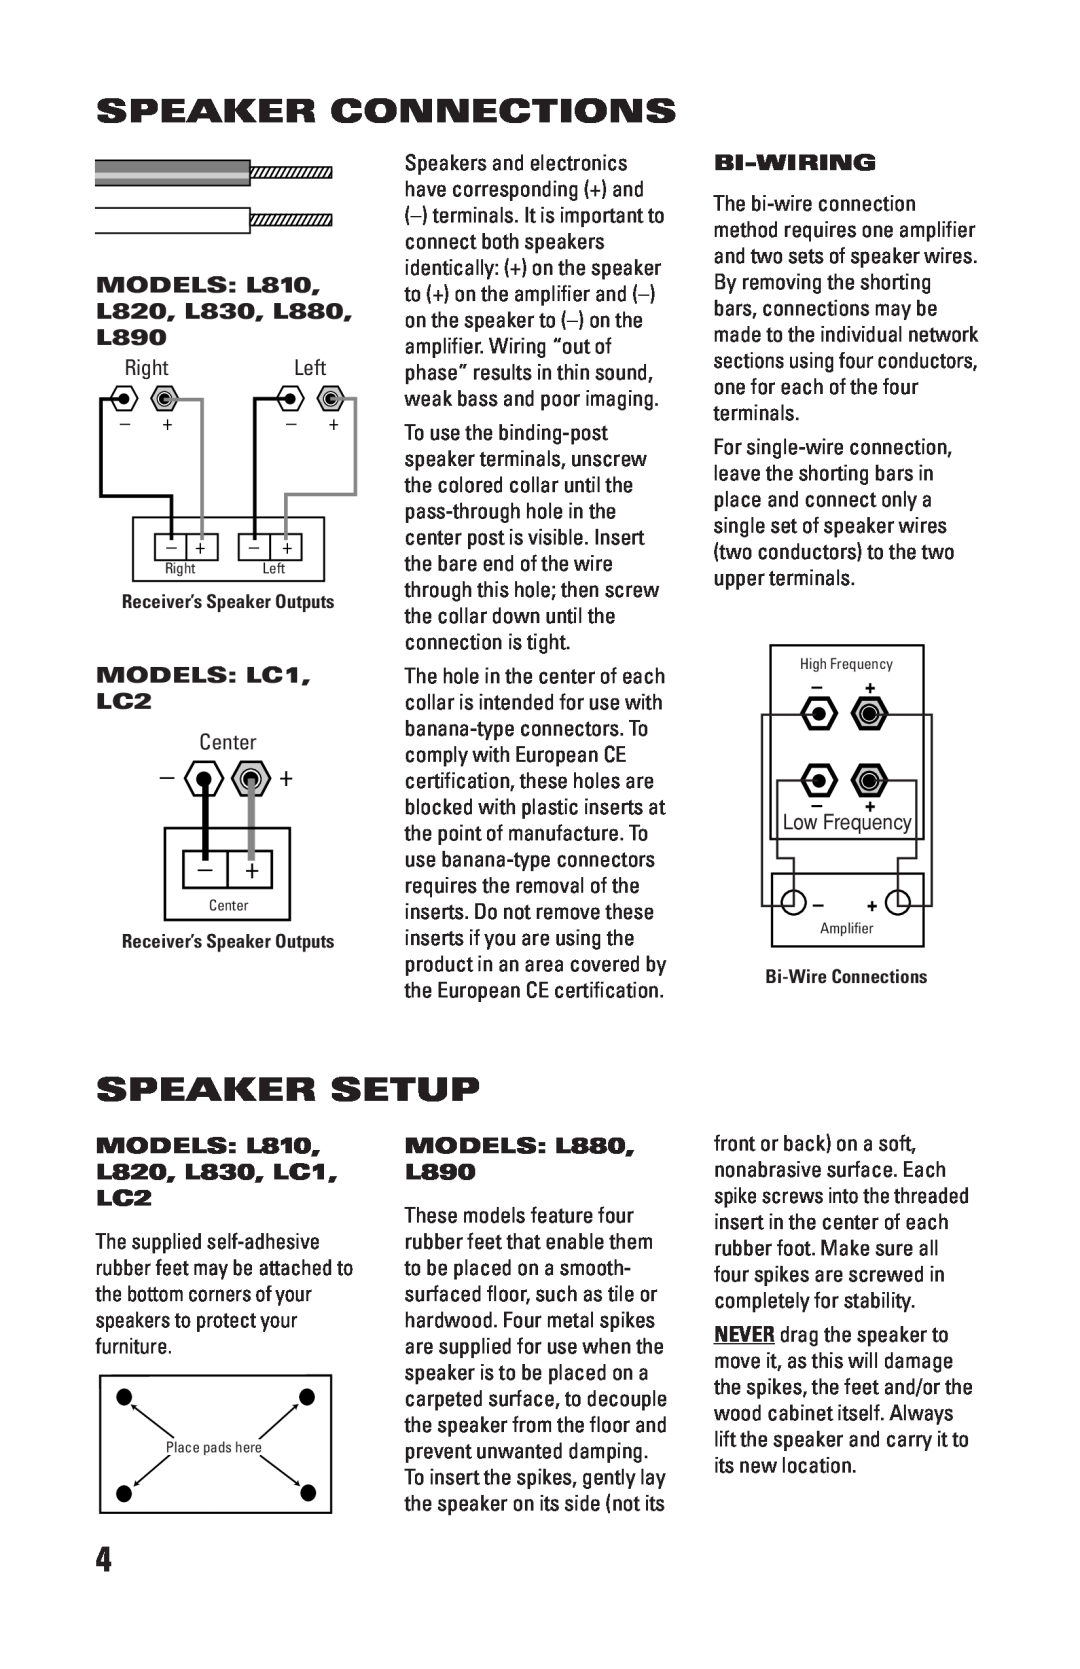 JBL LC1 manual Speaker Connections, Speaker Setup, MODELS L810, L820, L830, L880, L890, Bi-Wiring, MODELS L880, L890 